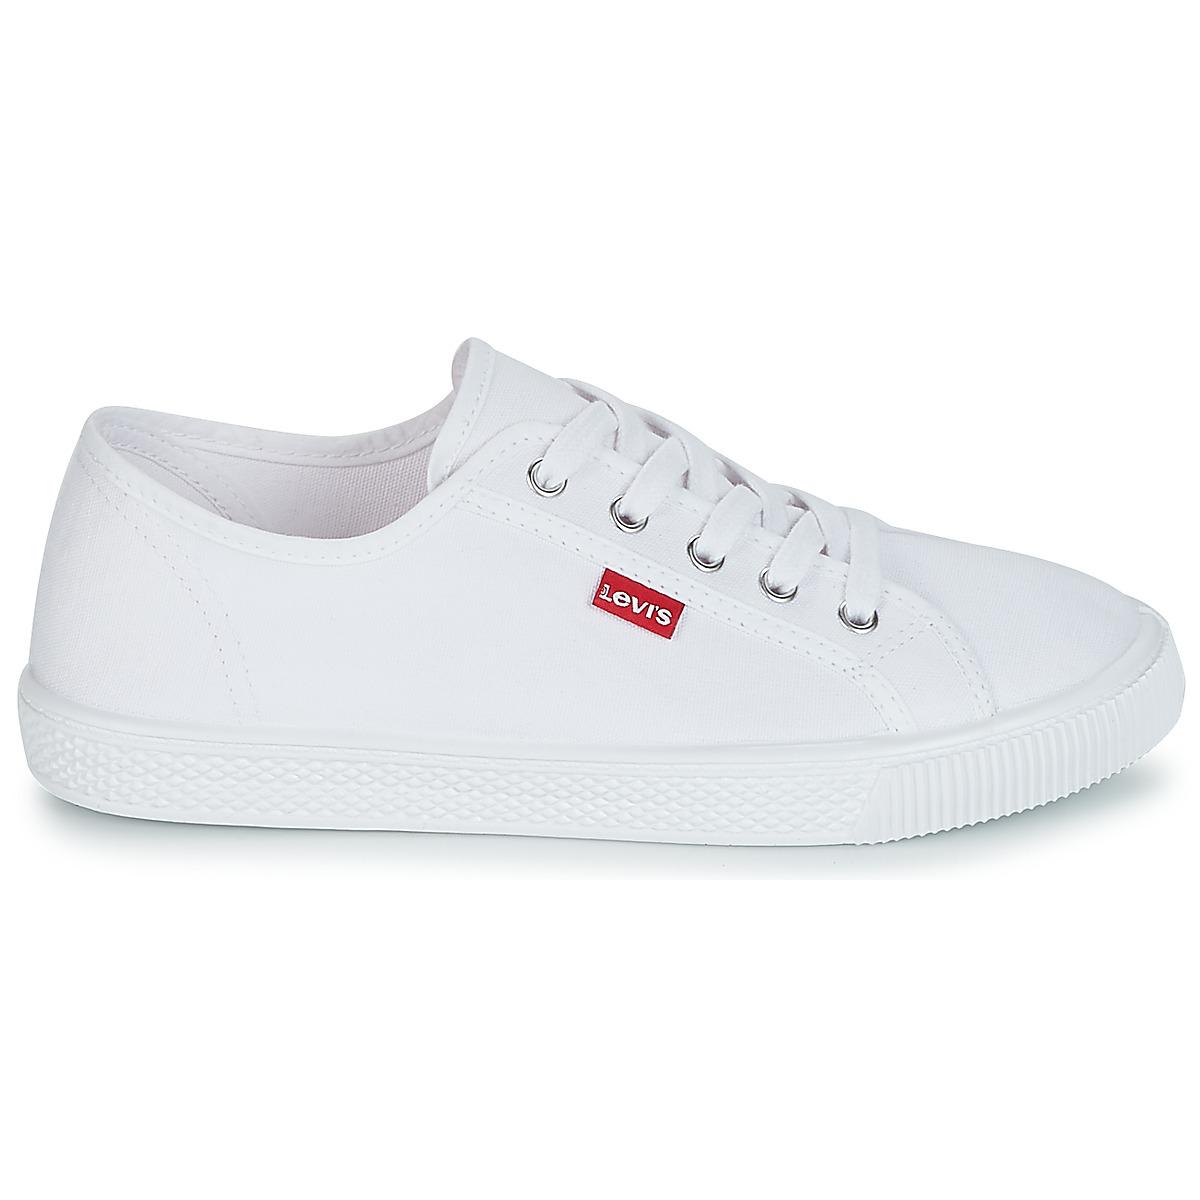 Sneakers - 100% Original- Levi's Unisex Malibu Beach S Regular White  Sneakers was sold for R249.00 on 9 Mar at 10:01 by JBInternational in  Johannesburg (ID:456853290)